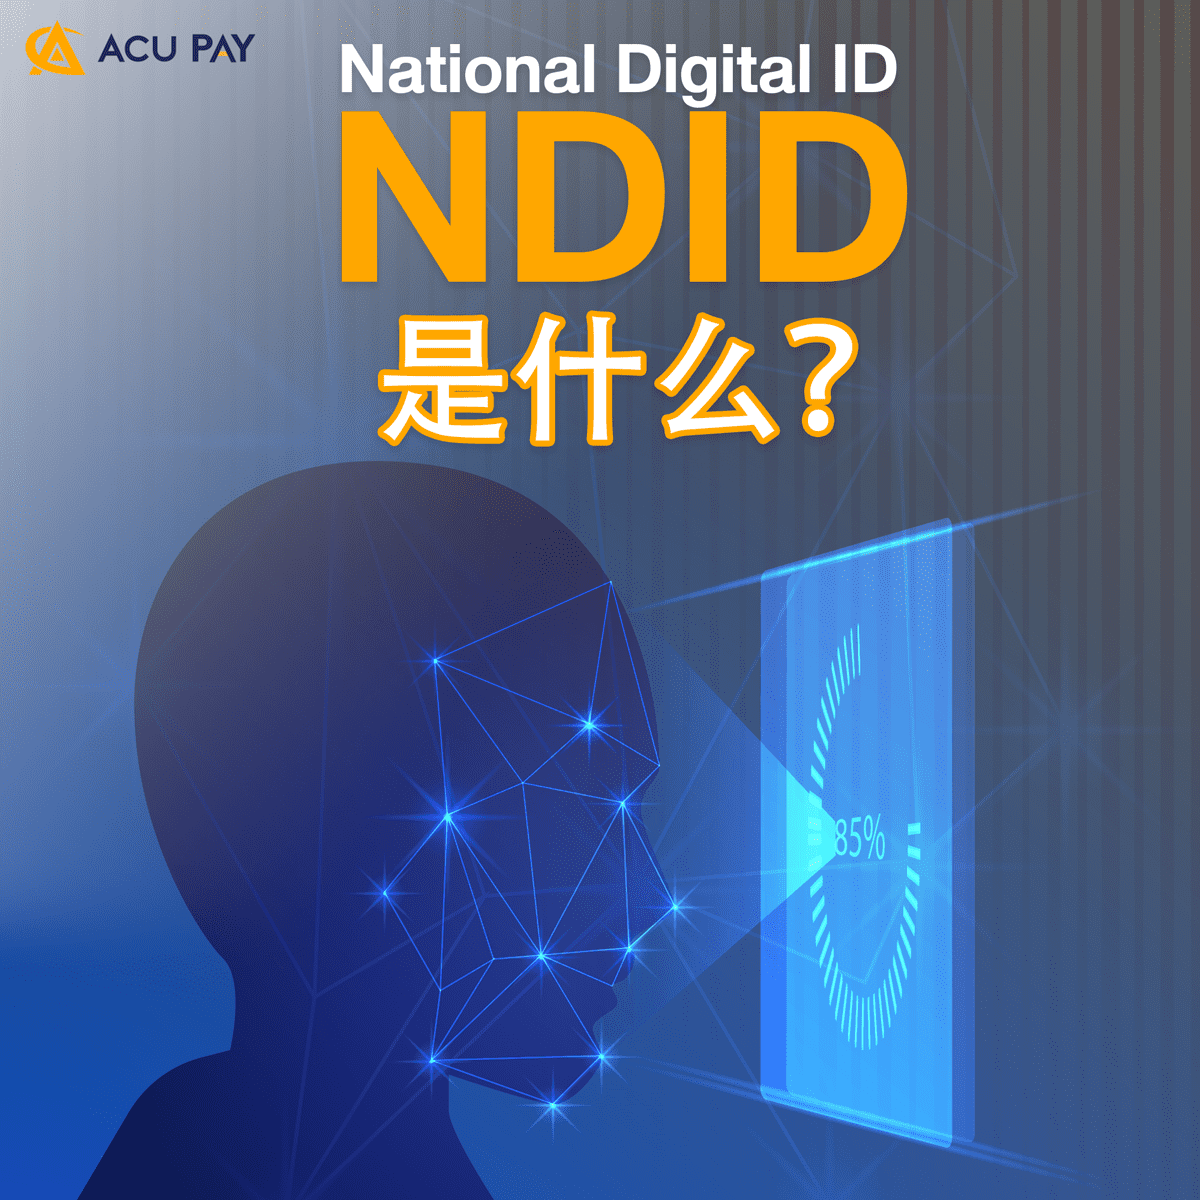 NDID (National Digital ID) 是什么